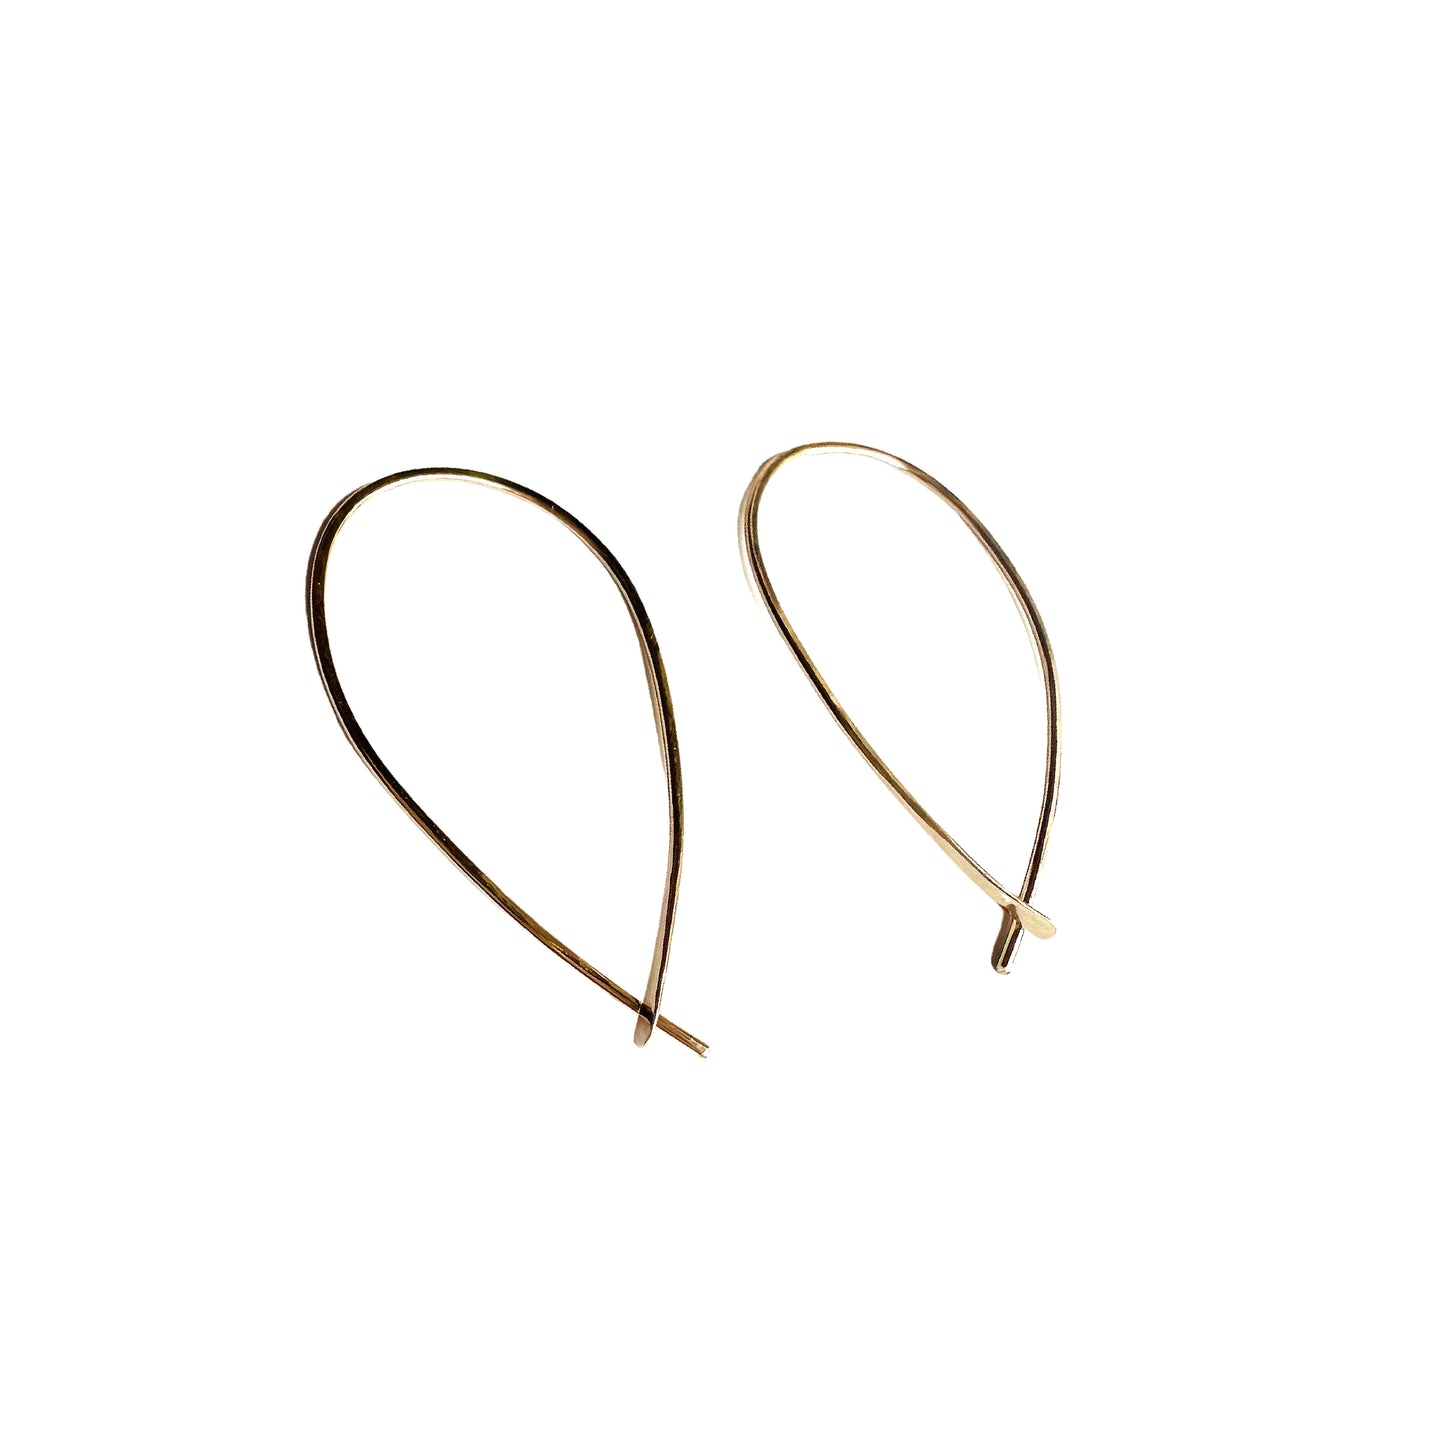 Teardrop Threader Earrings in 14k Gold Filled or Sterling Silver